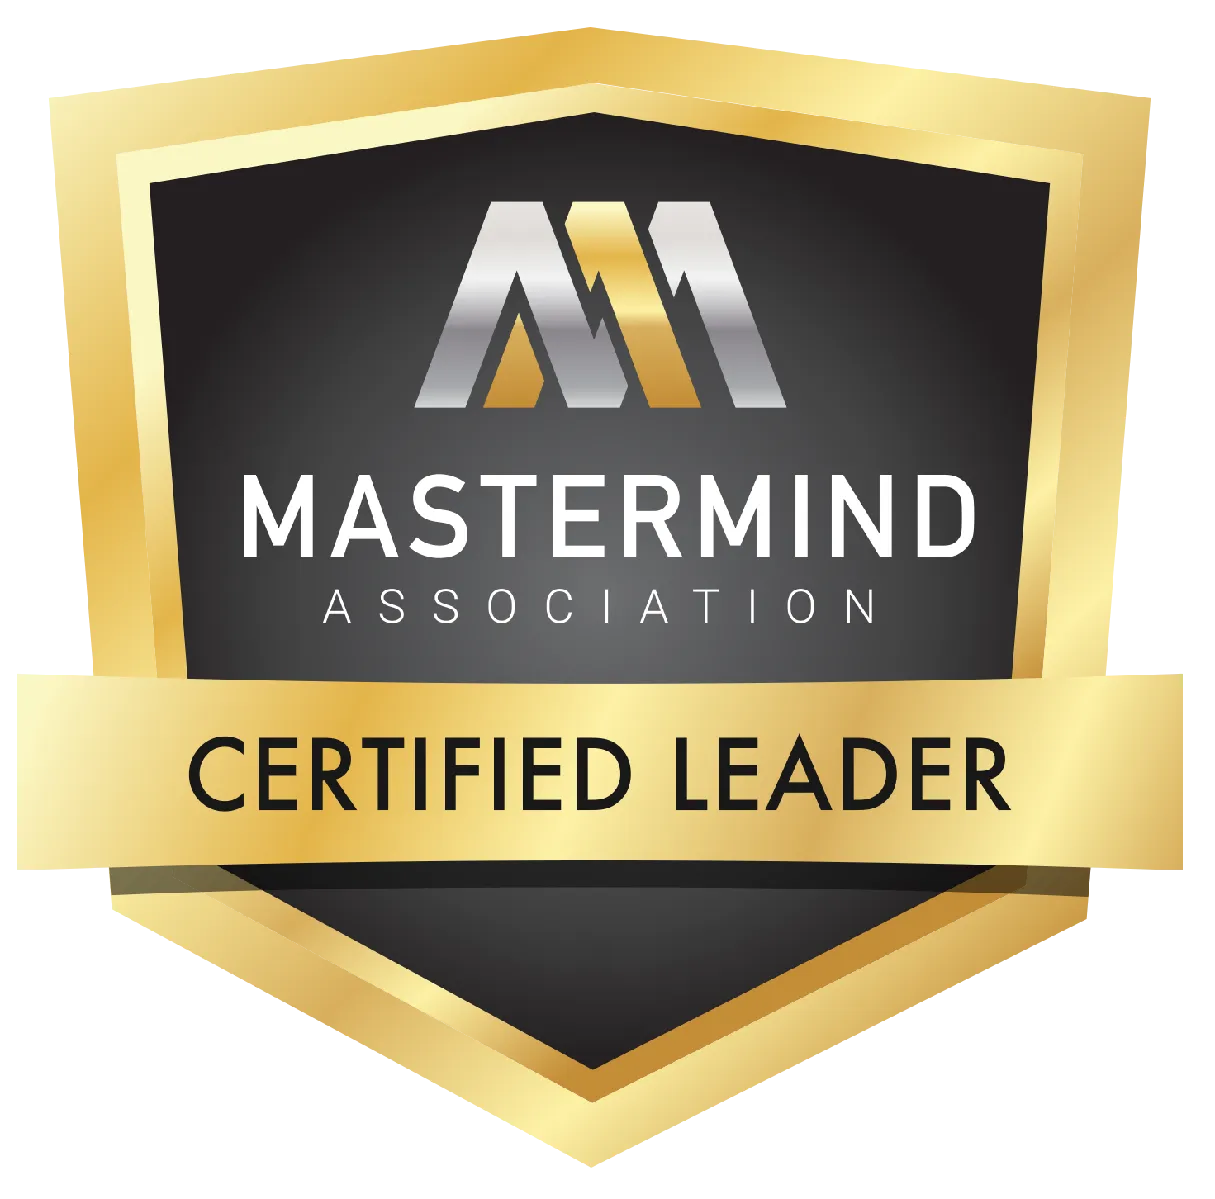 Mastermind Association Certification